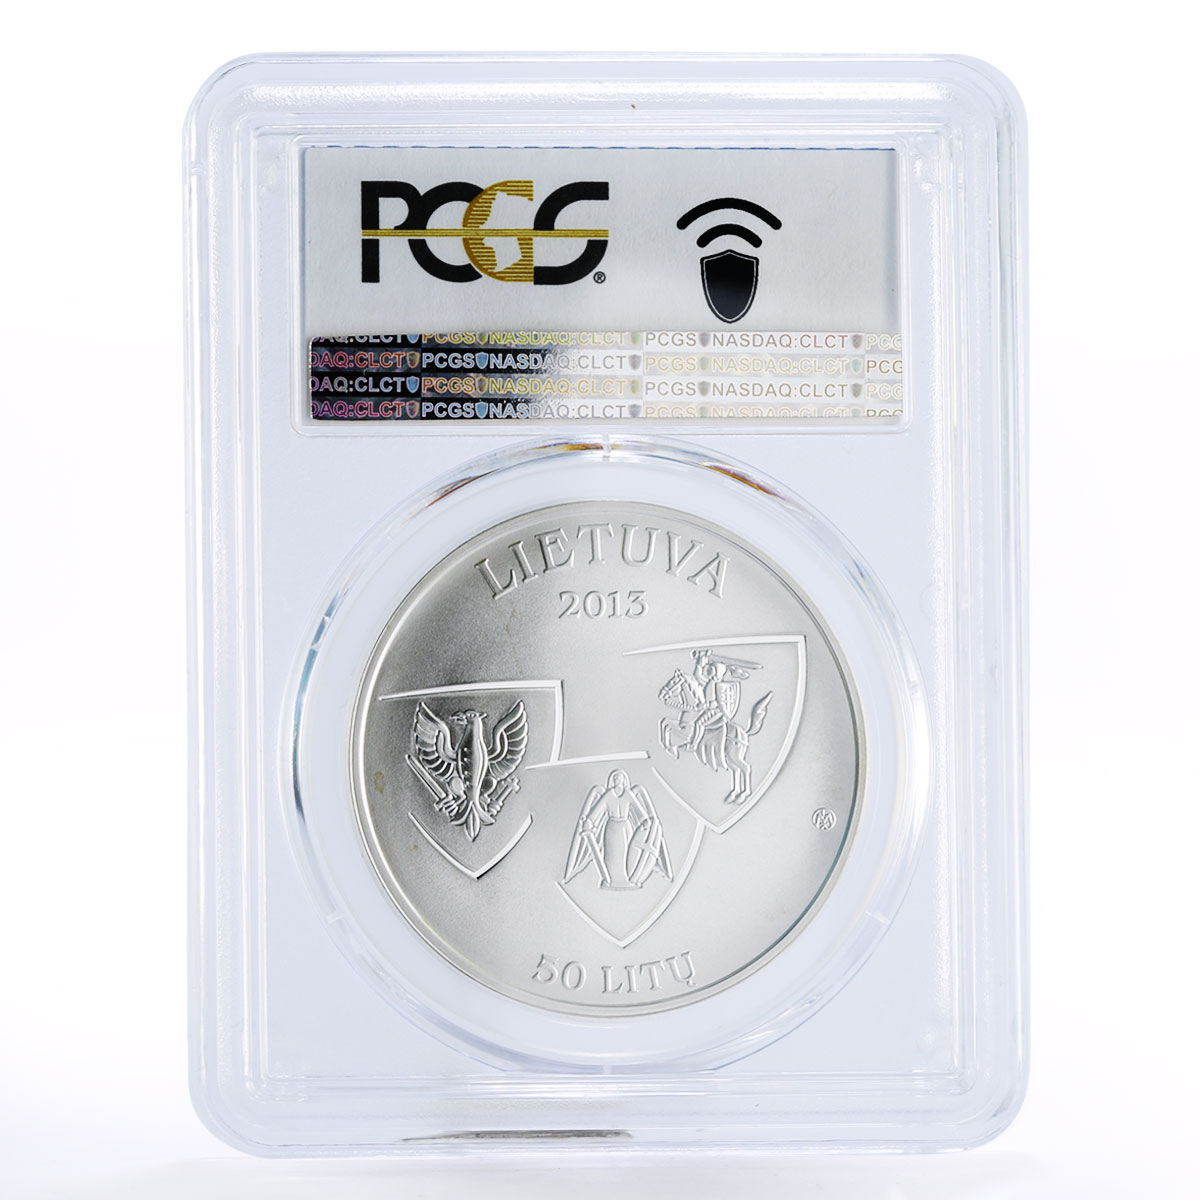 Lithuania 50 litu 150th Anniversary of Uprising PR70 PCGS silver coin 2013